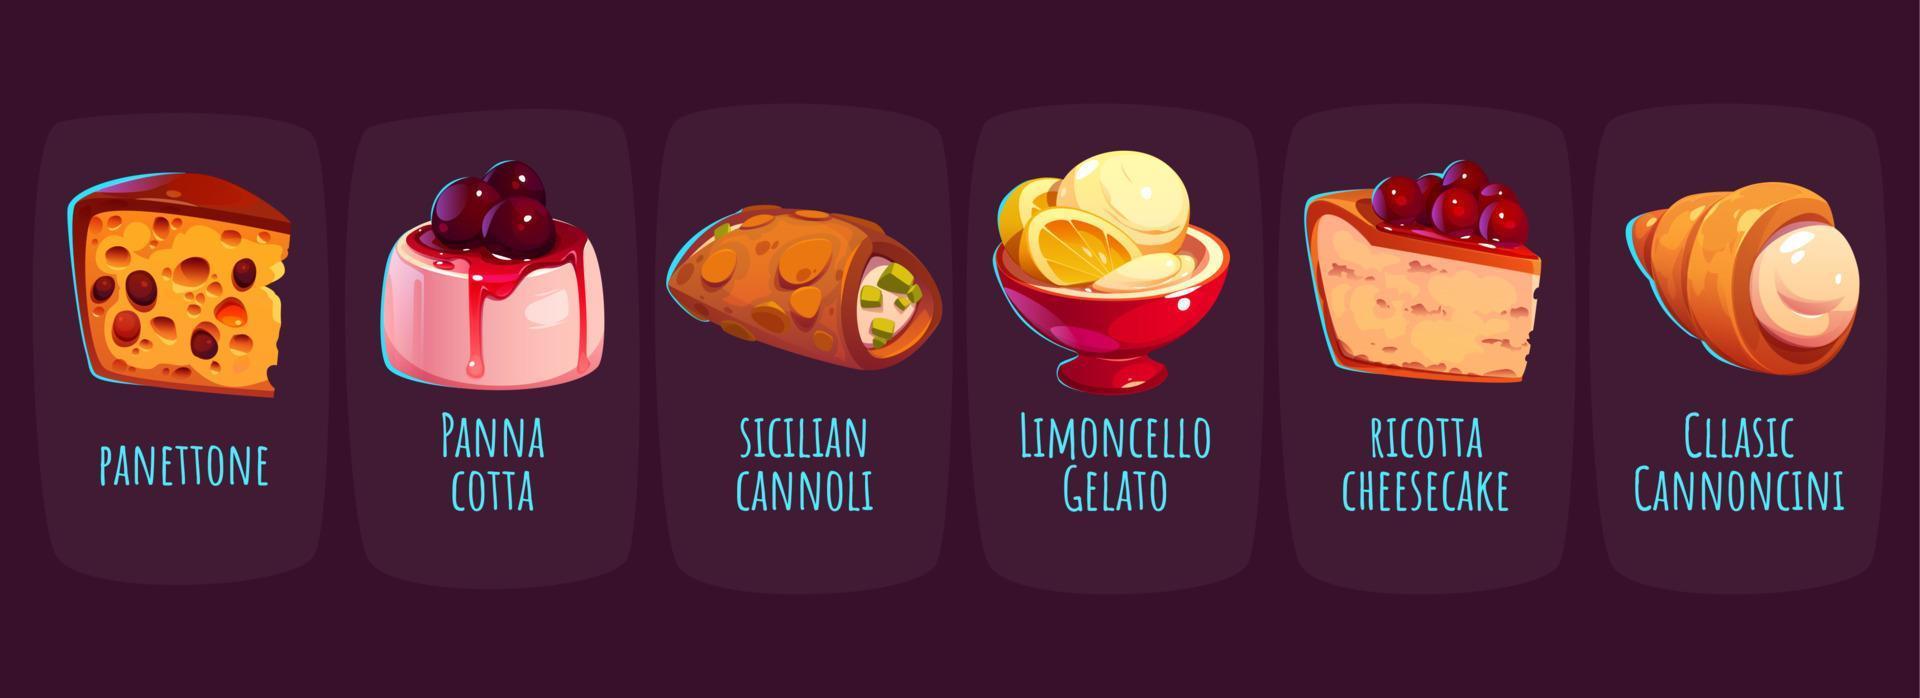 Italian desserts and cakes, cannoli, panna cotta vector